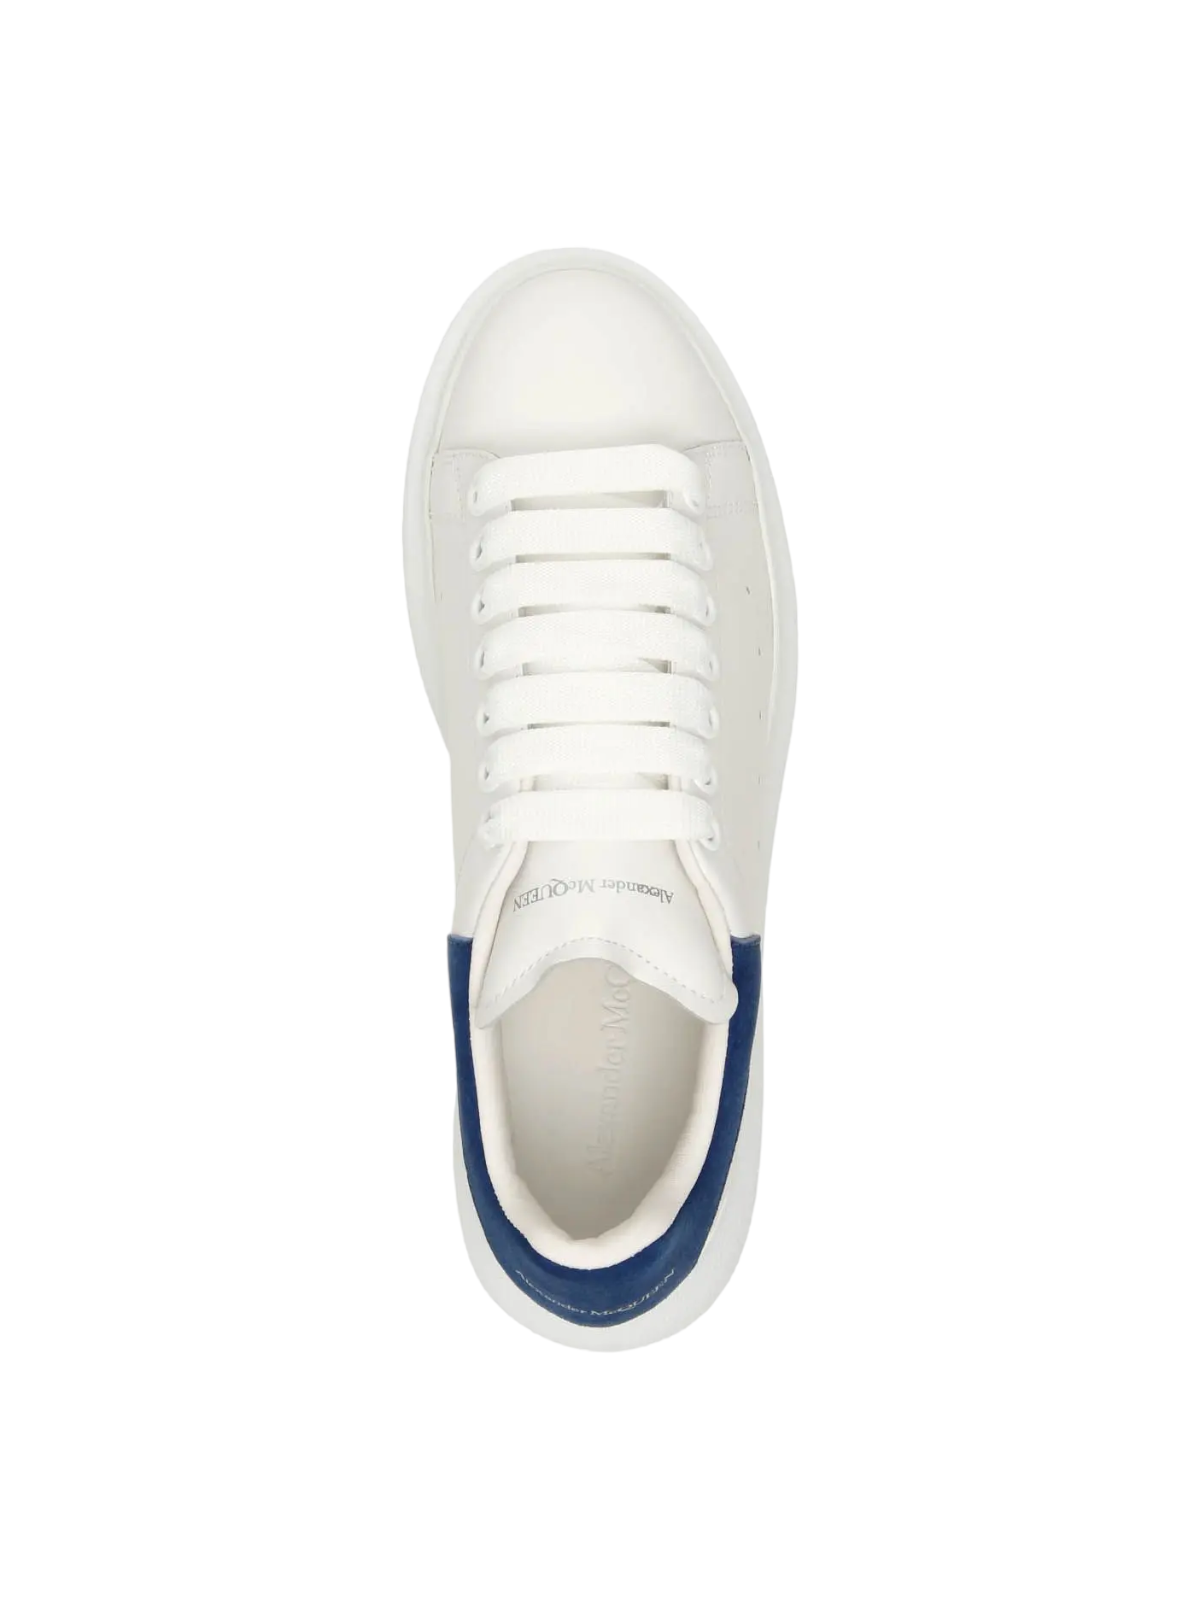 Alexander McQueen Oversized Logo Sneakers White/Blue